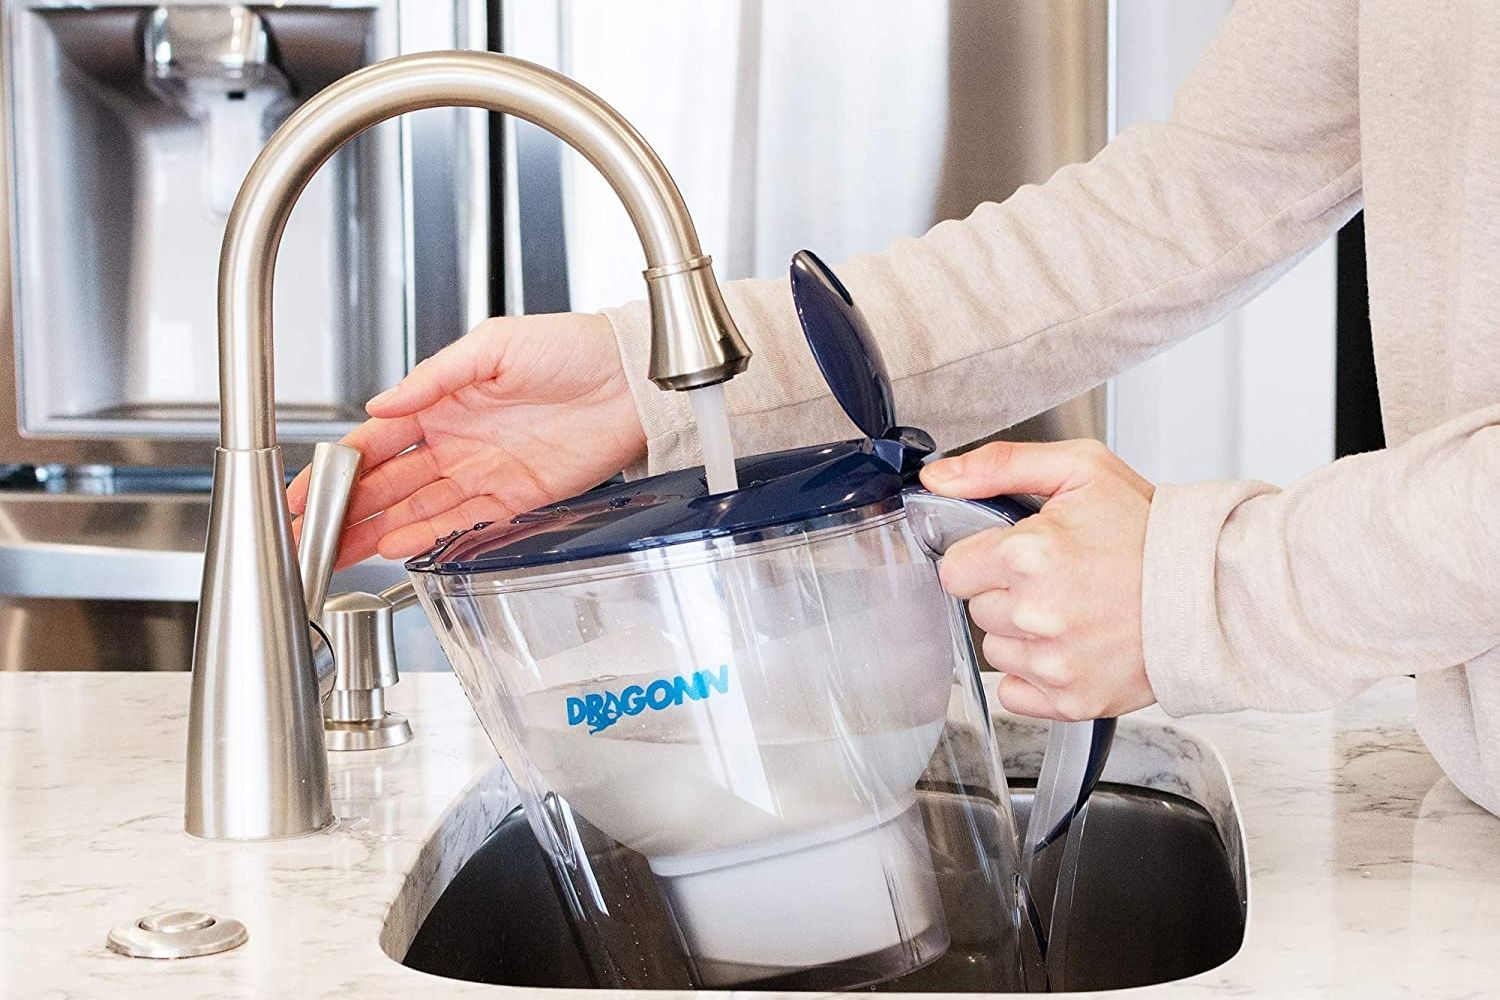 A person fills the best alkaline water filter pitcher at a kitchen sink